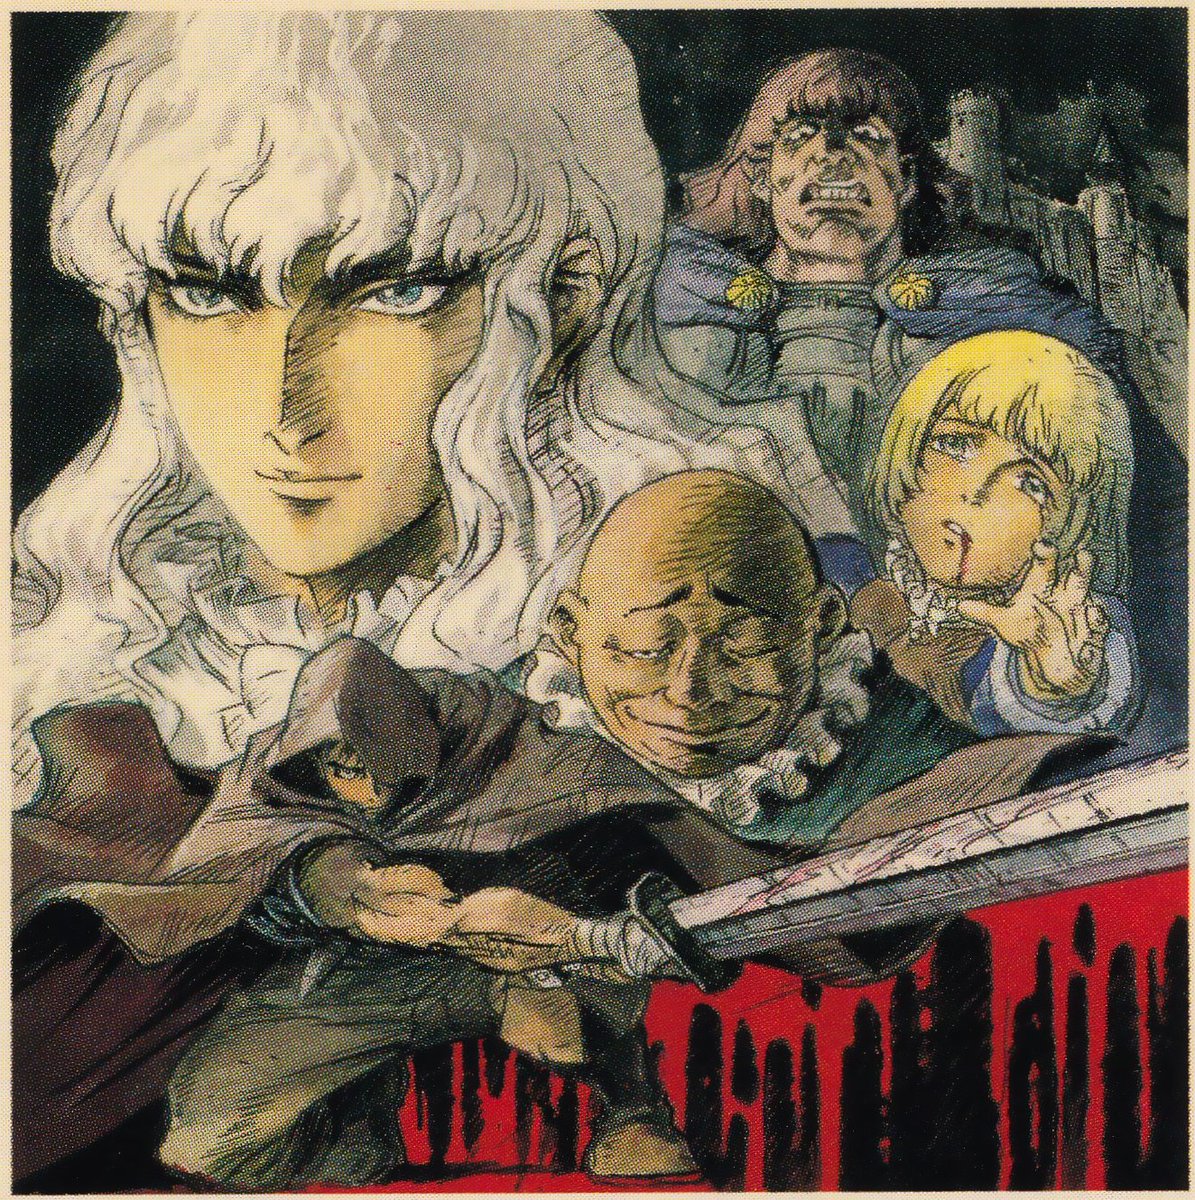 1997 Anime - 2001 JPN DVD boxset art by Yoshihiko Umakoshi (馬越 嘉彦)